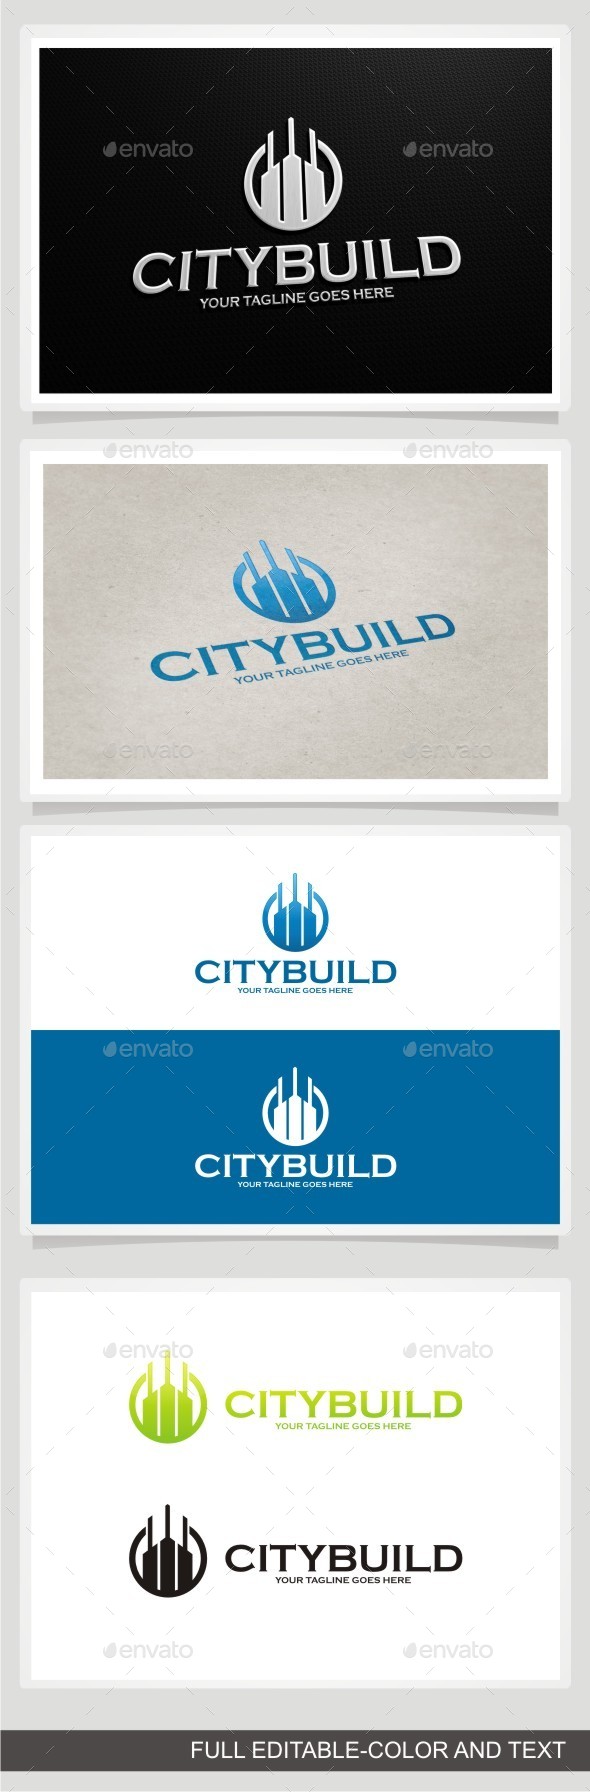 City Build